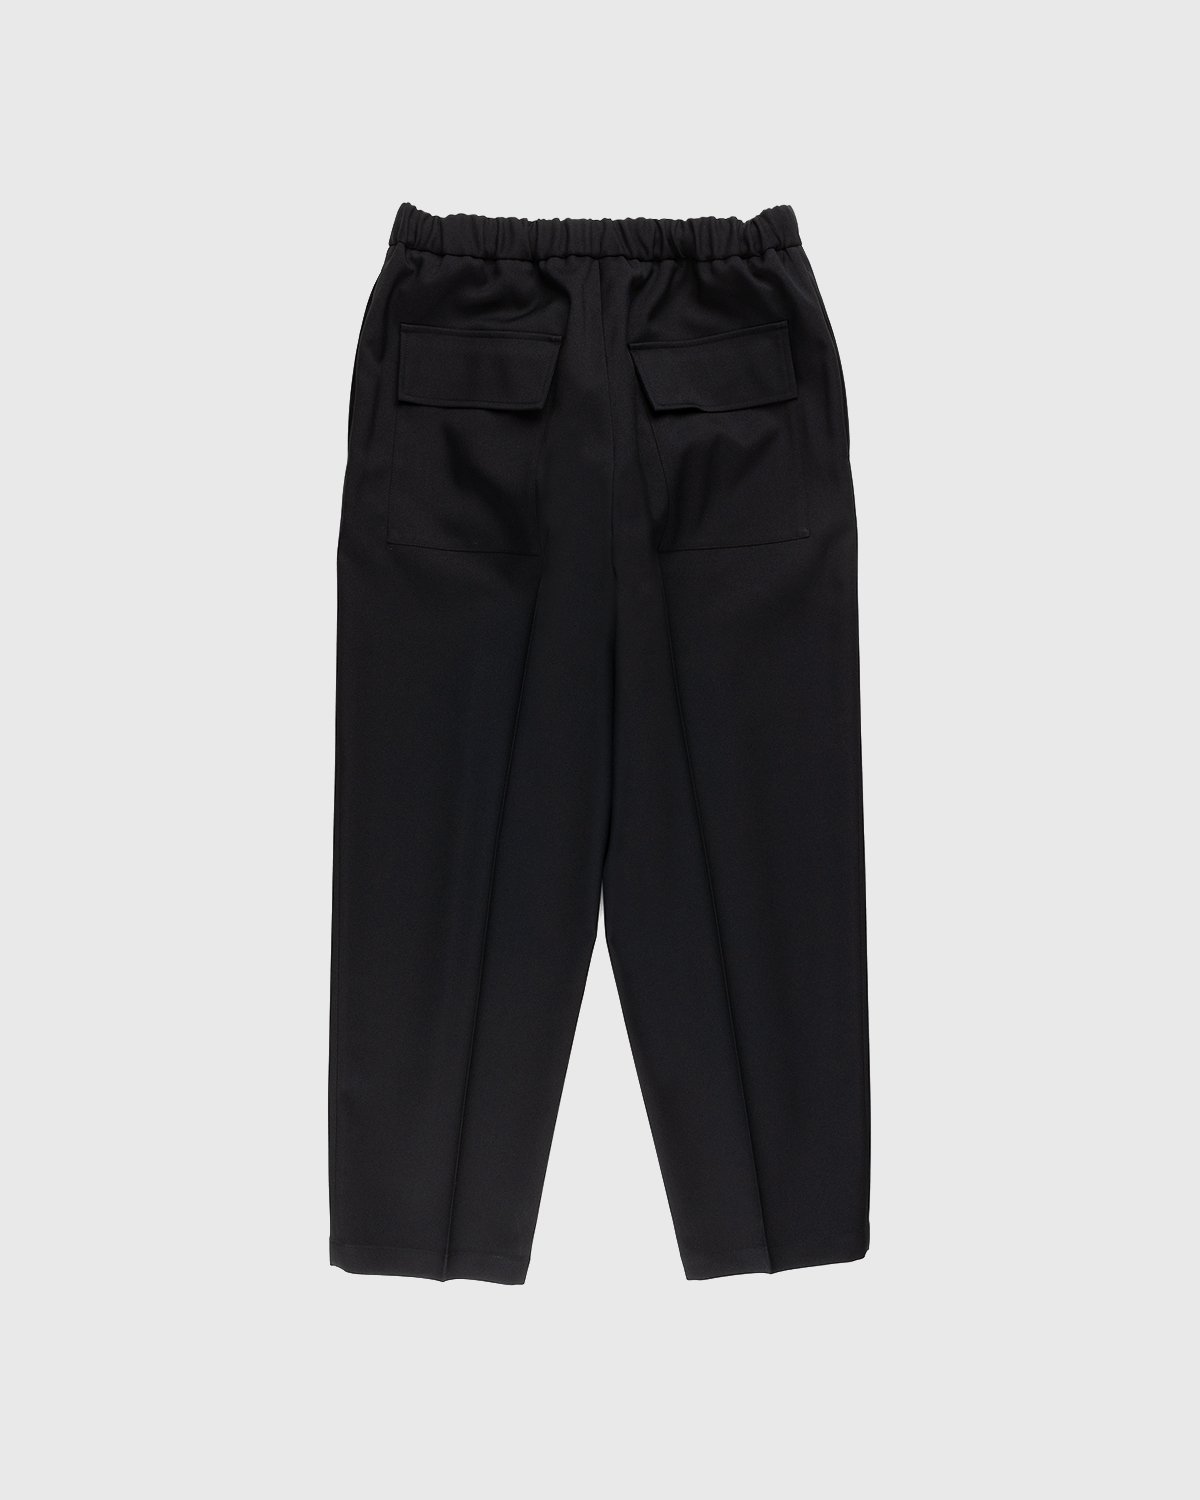 Jil Sander - Trouser D 09 AW 20 Black - Clothing - Black - Image 2